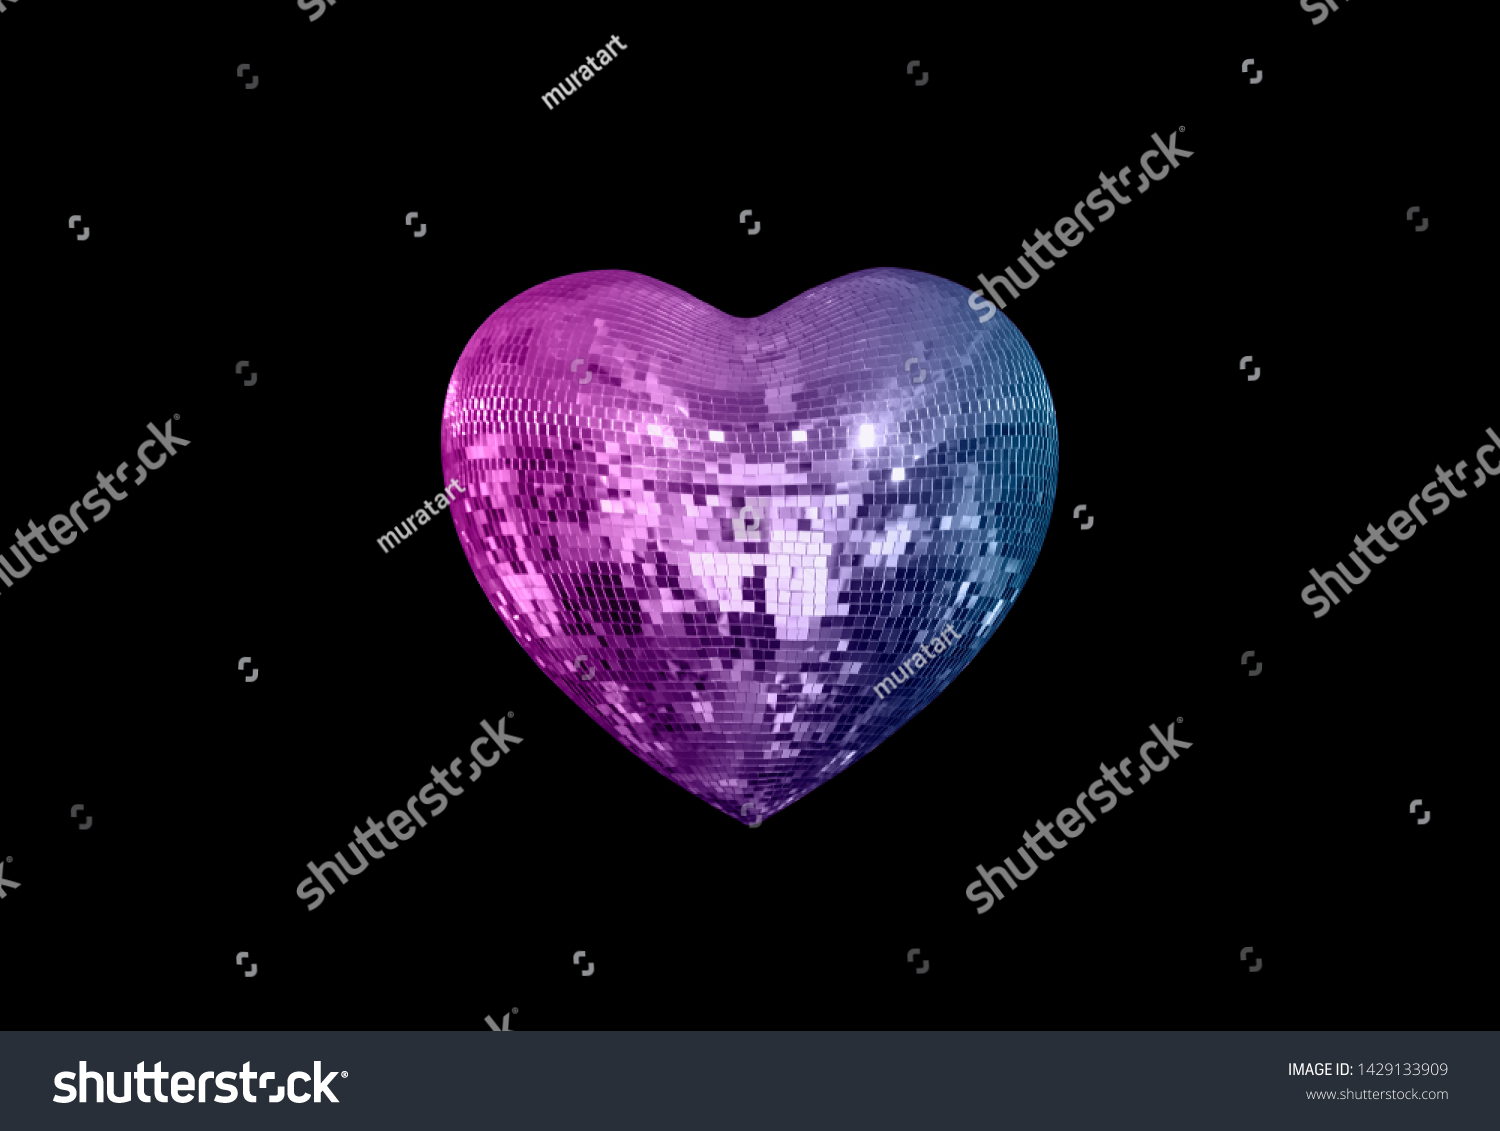 2,970 Heart disco ball Images, Stock Photos & Vectors | Shutterstock